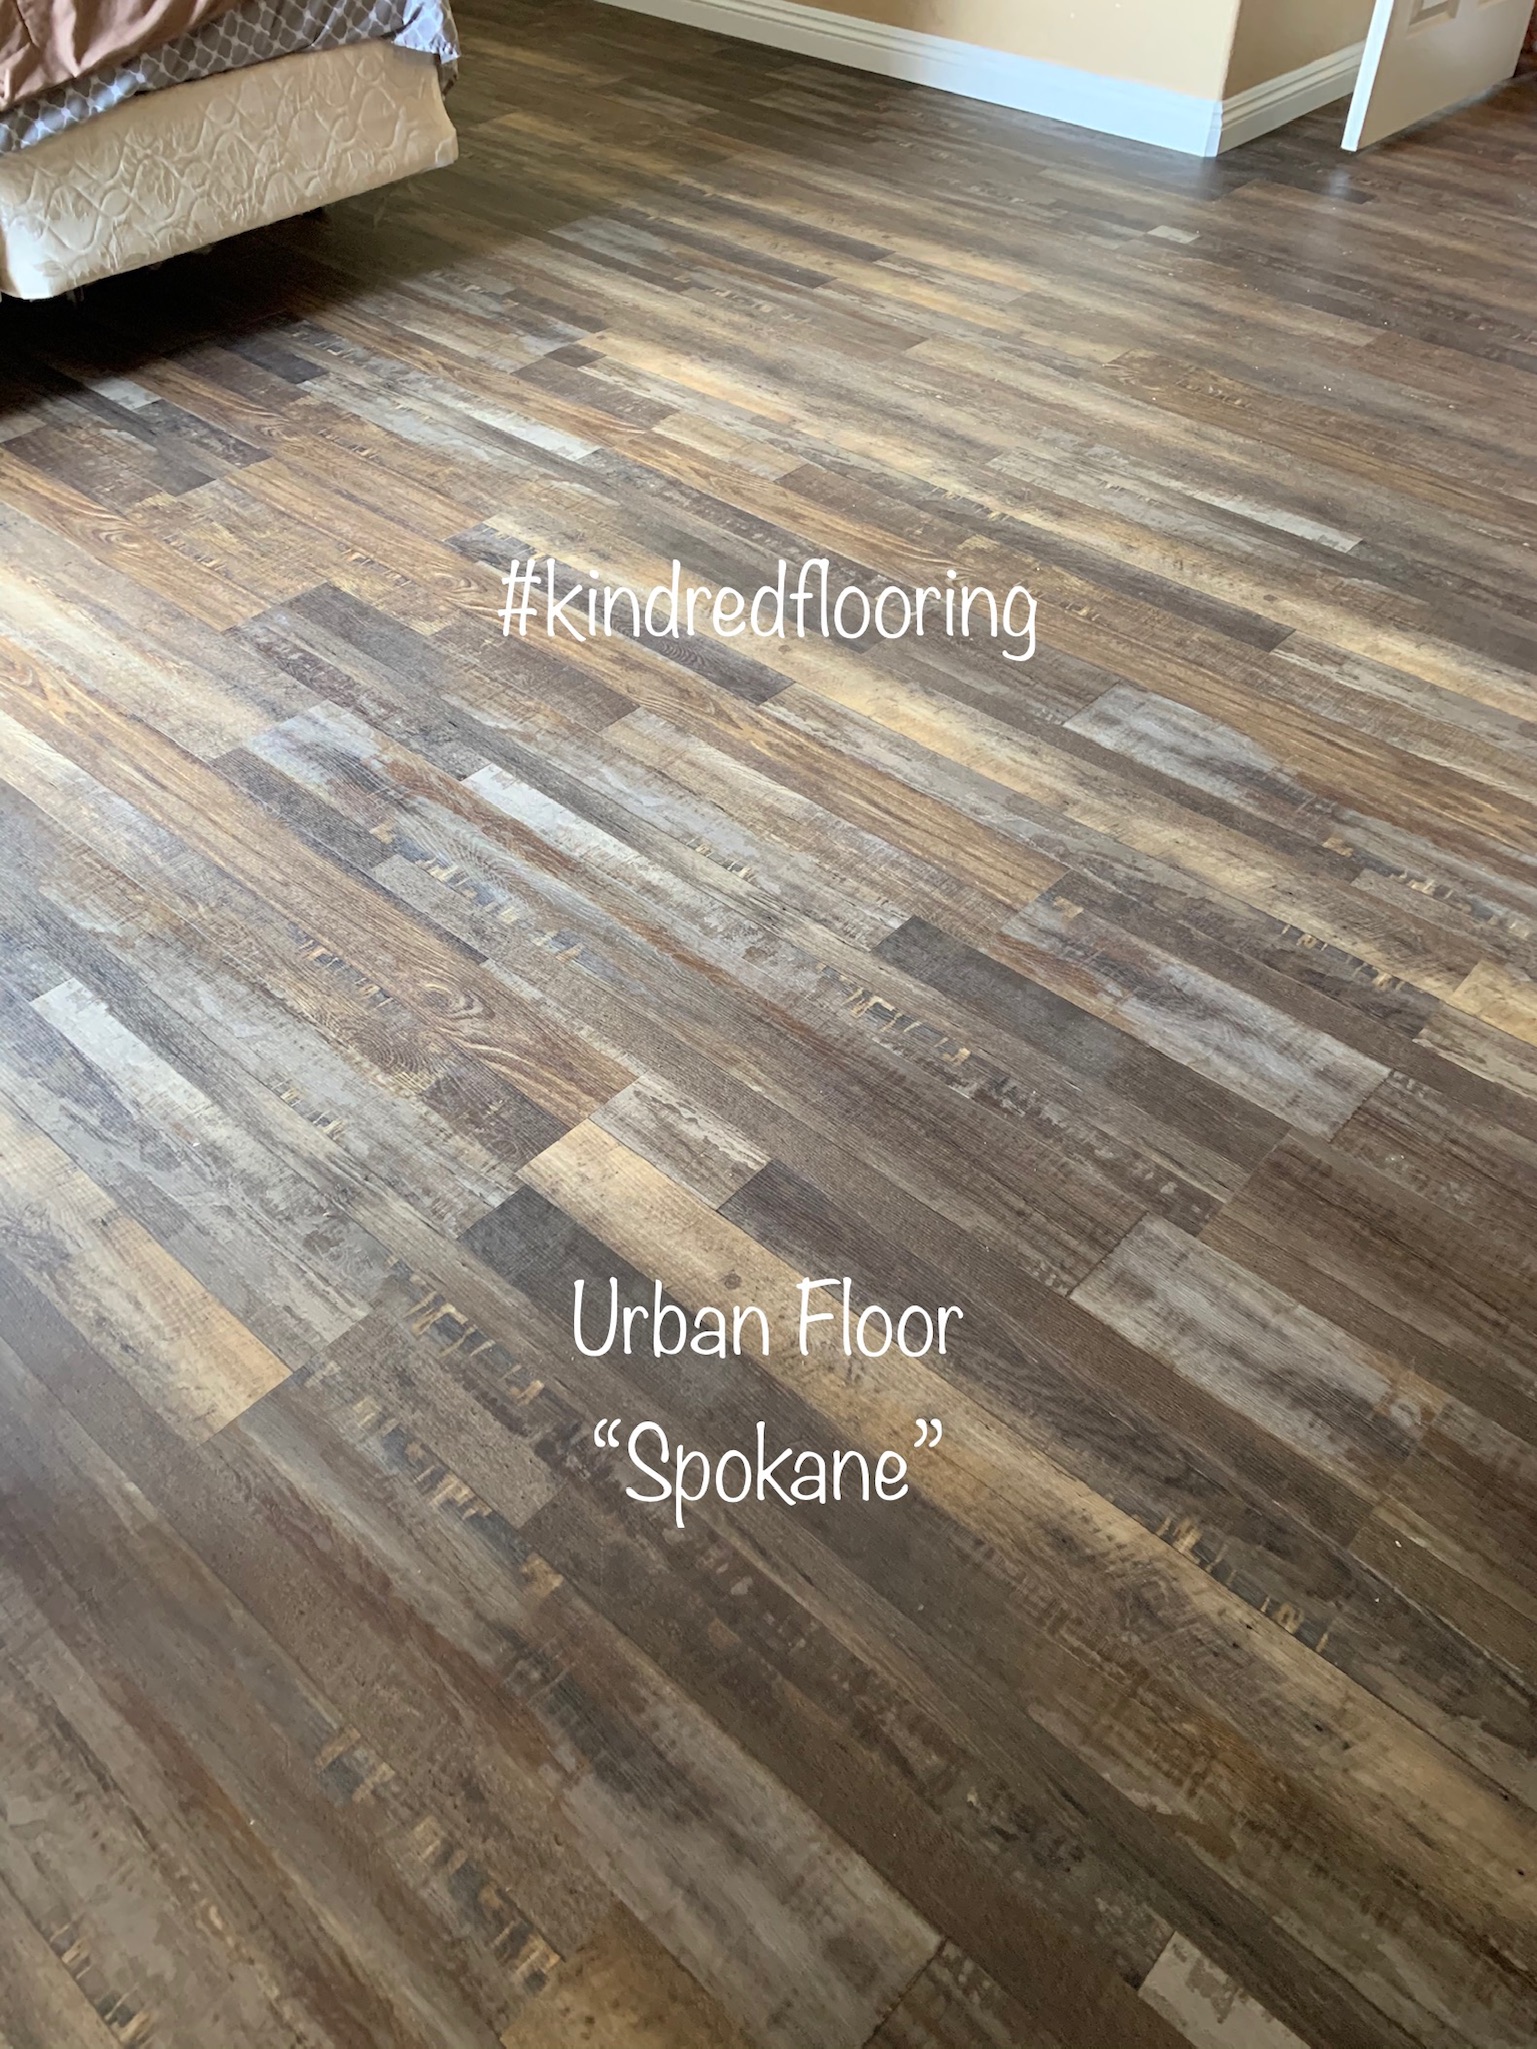 Urban Floor "Spokane"